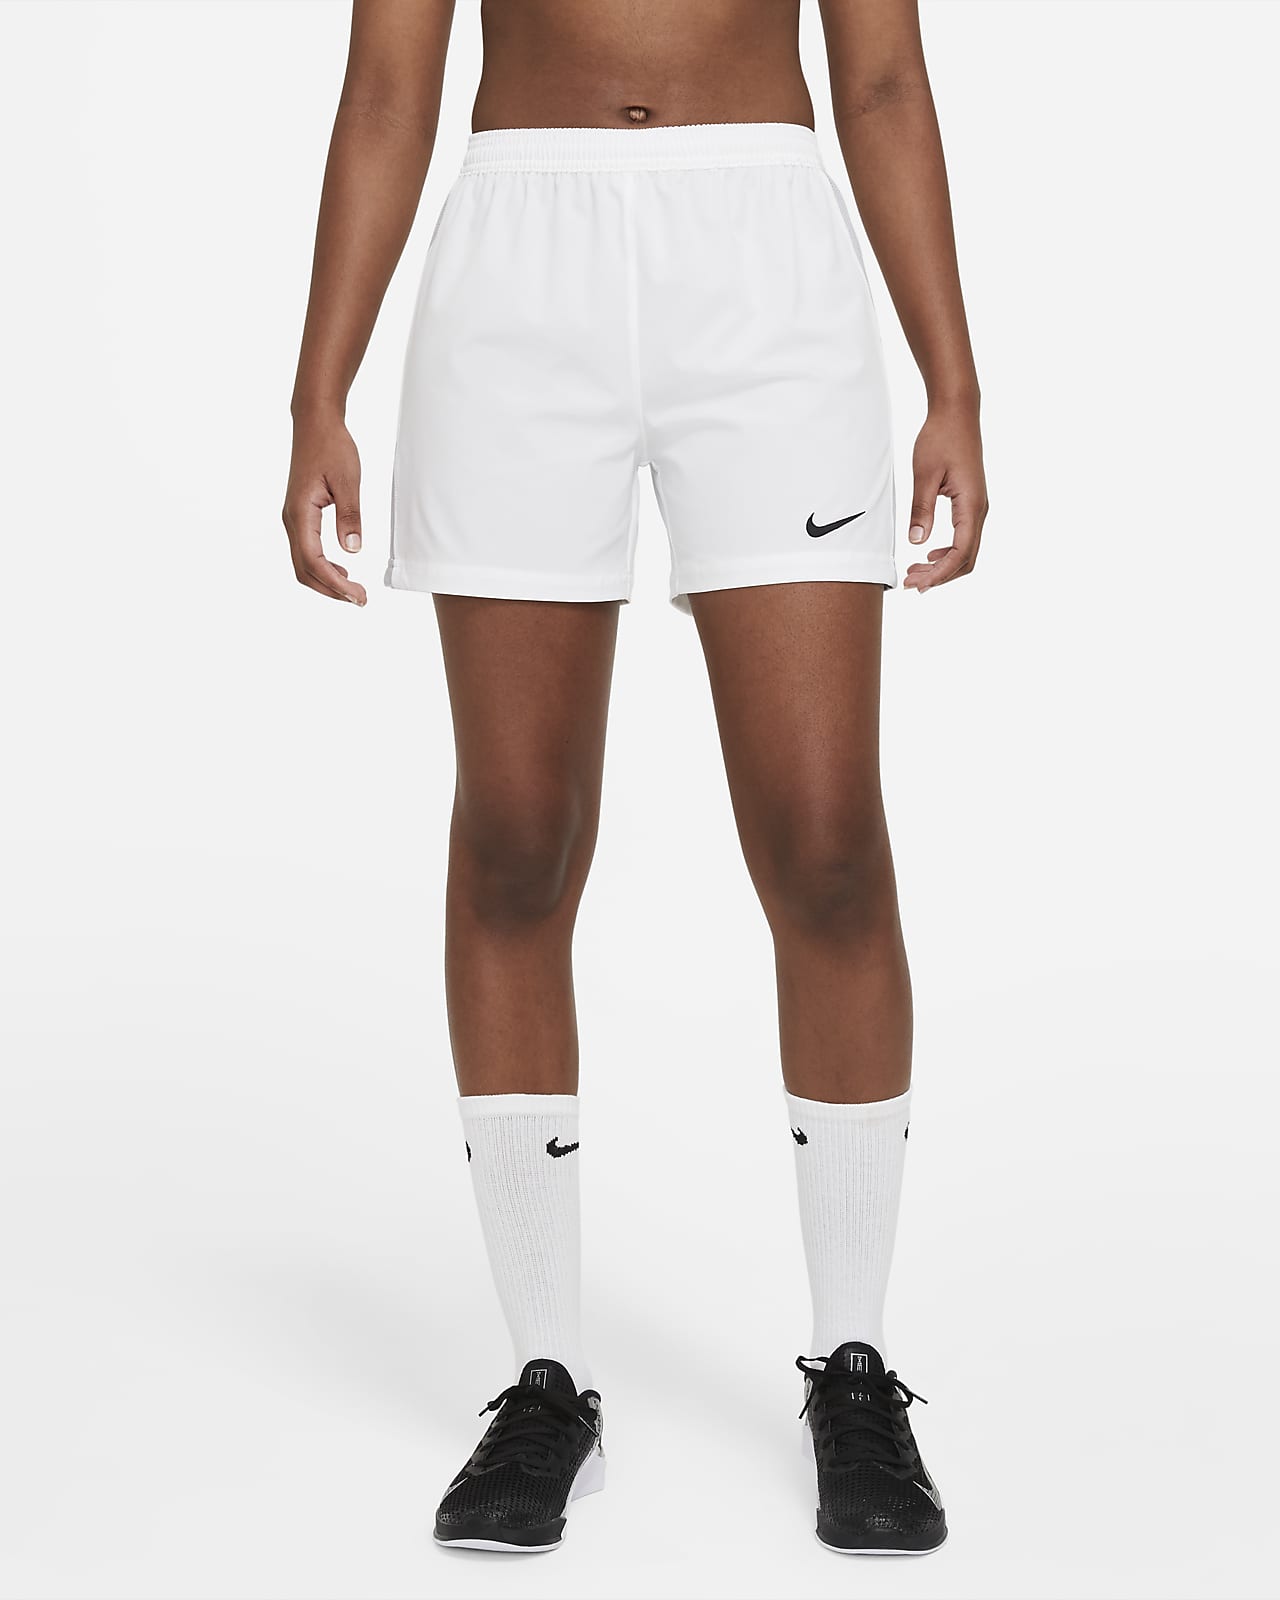 Nike Vapor Women's Flag Football Shorts